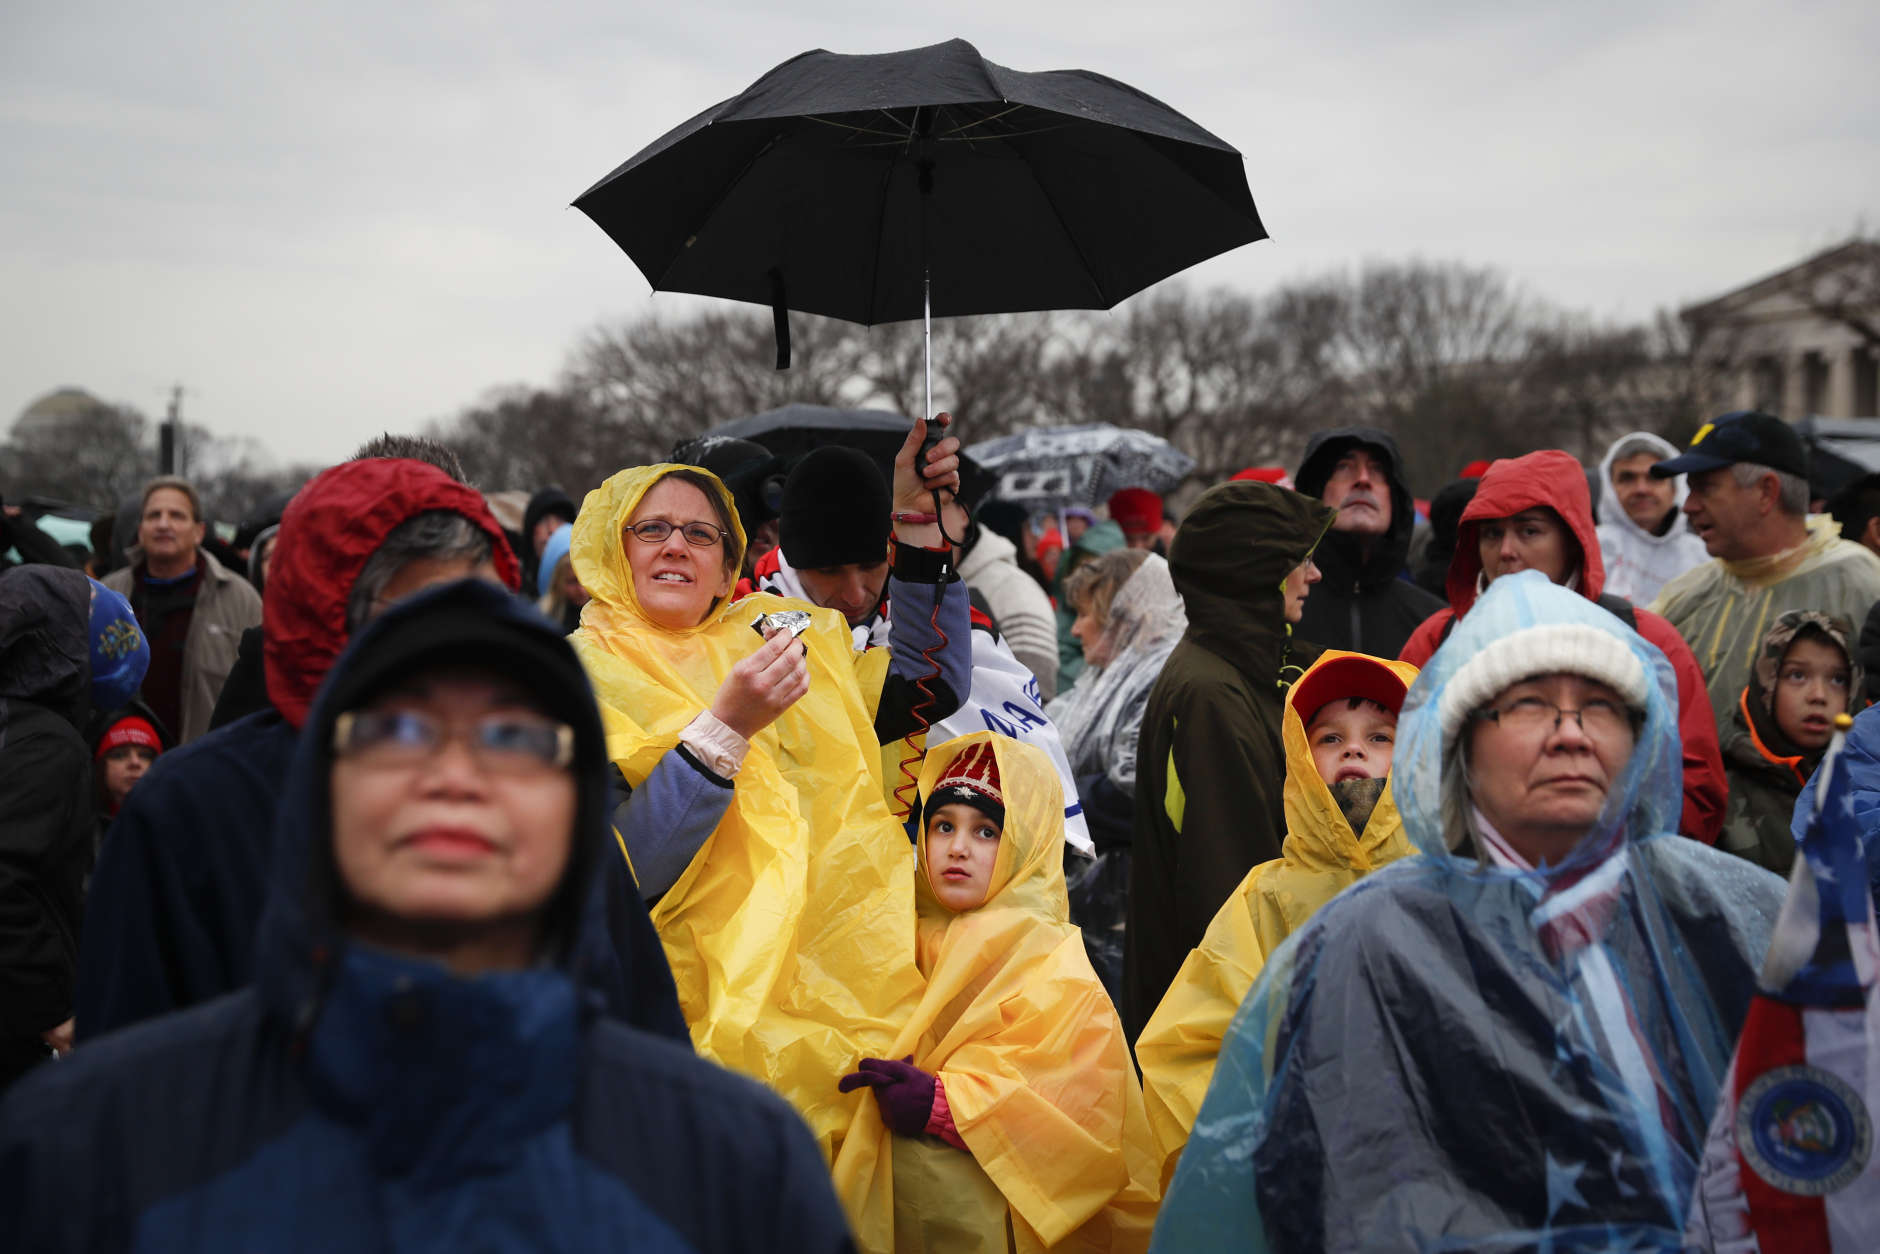 Spectators wait in the rain on the National Mall in Washington, Friday, Jan. 20, 2017, before the presidential inauguration of Donald Trump. (AP Photo/John Minchillo)